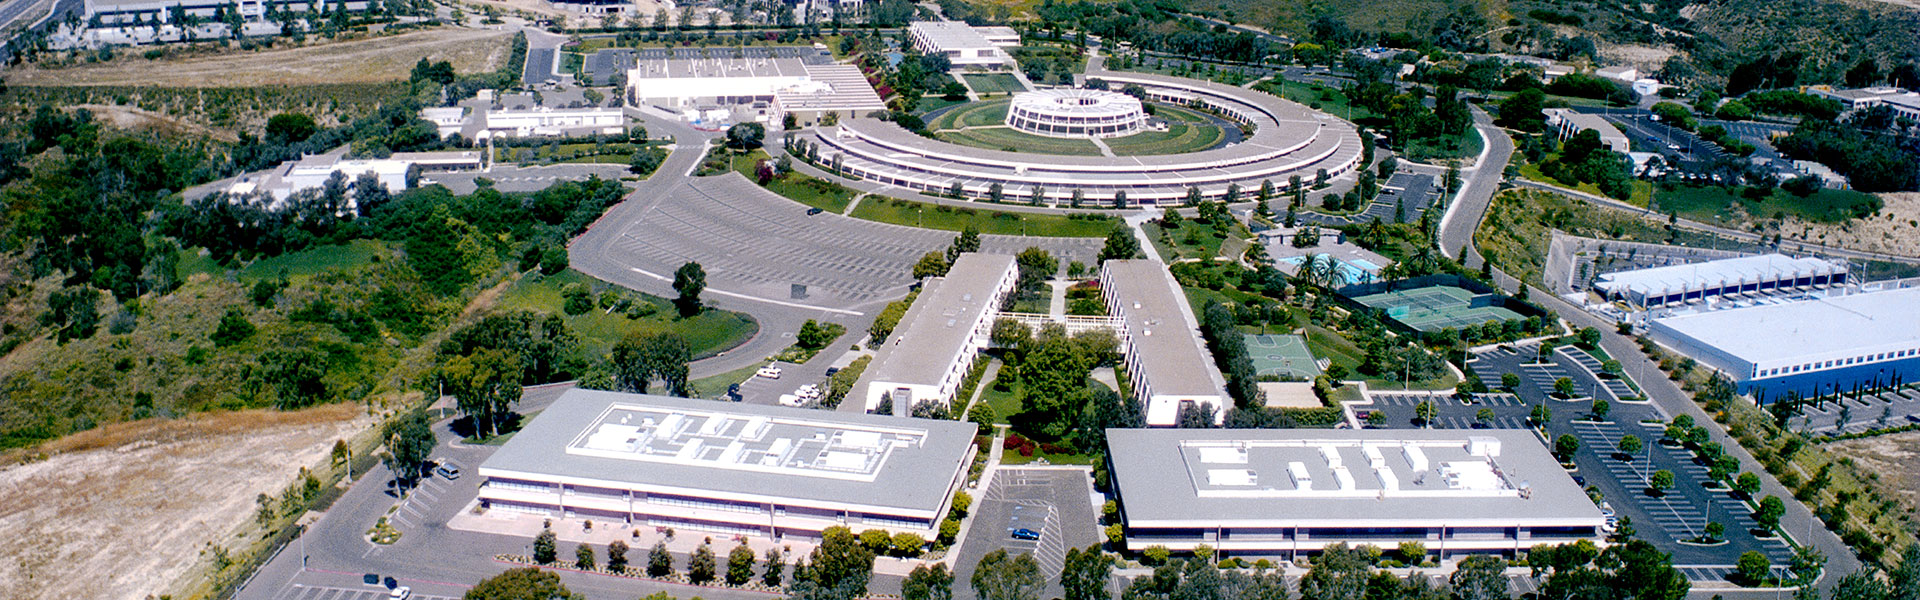 General Atomics aerial image of the Torrey Pines campus